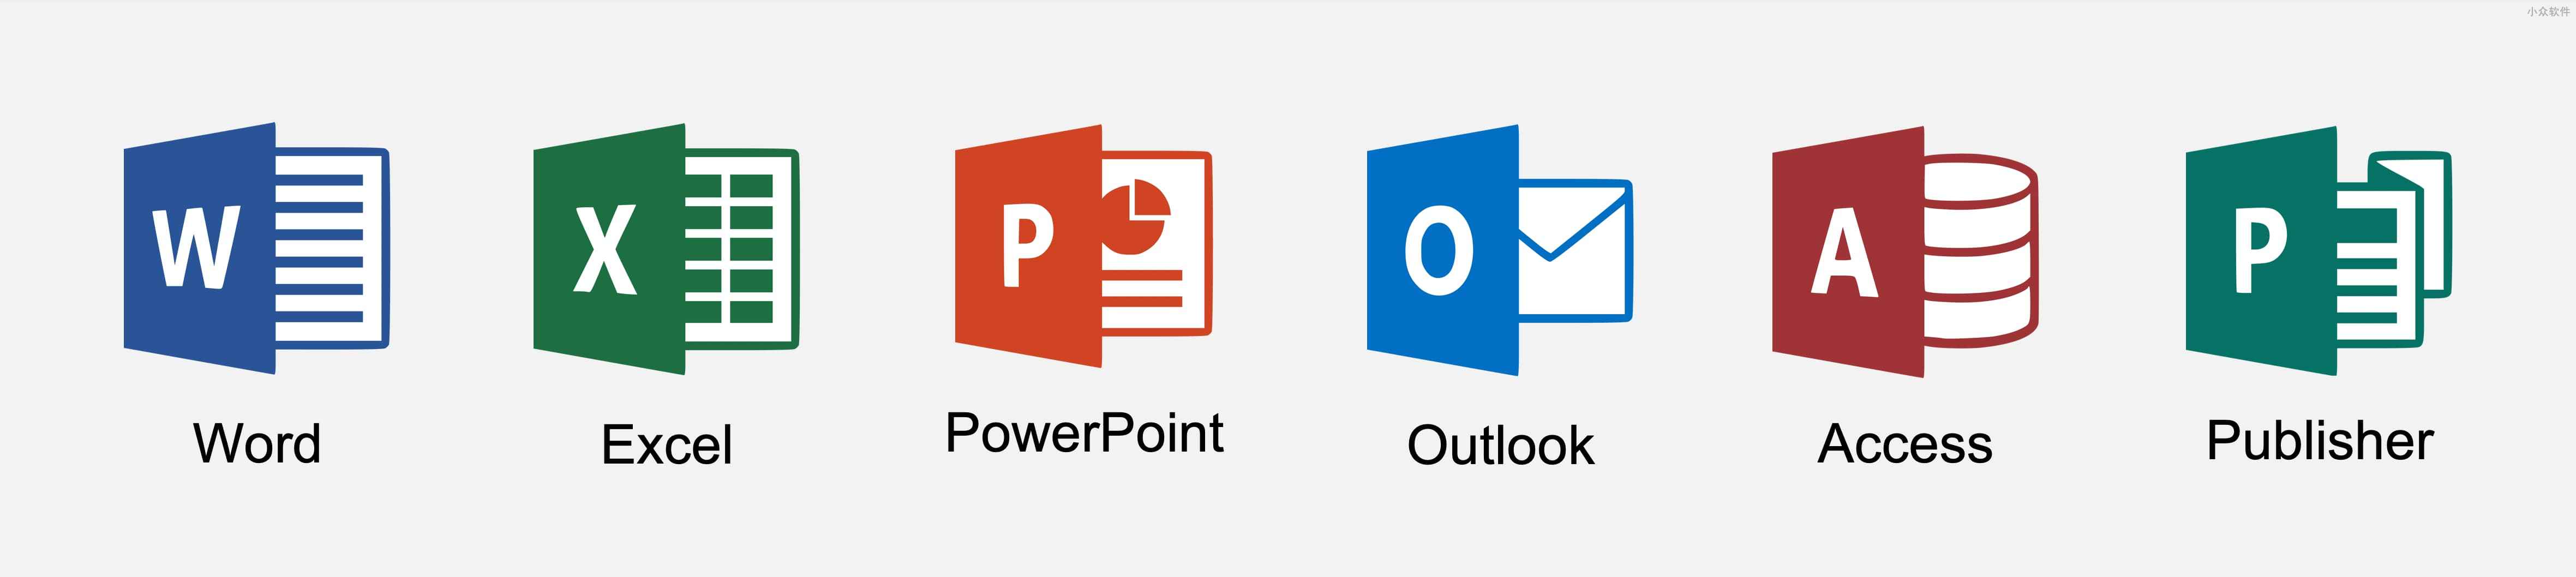 Office 365 个人/家庭版 5+ 折 特价，立即拥有正版 Word/Excel/PPT/Outlook 3